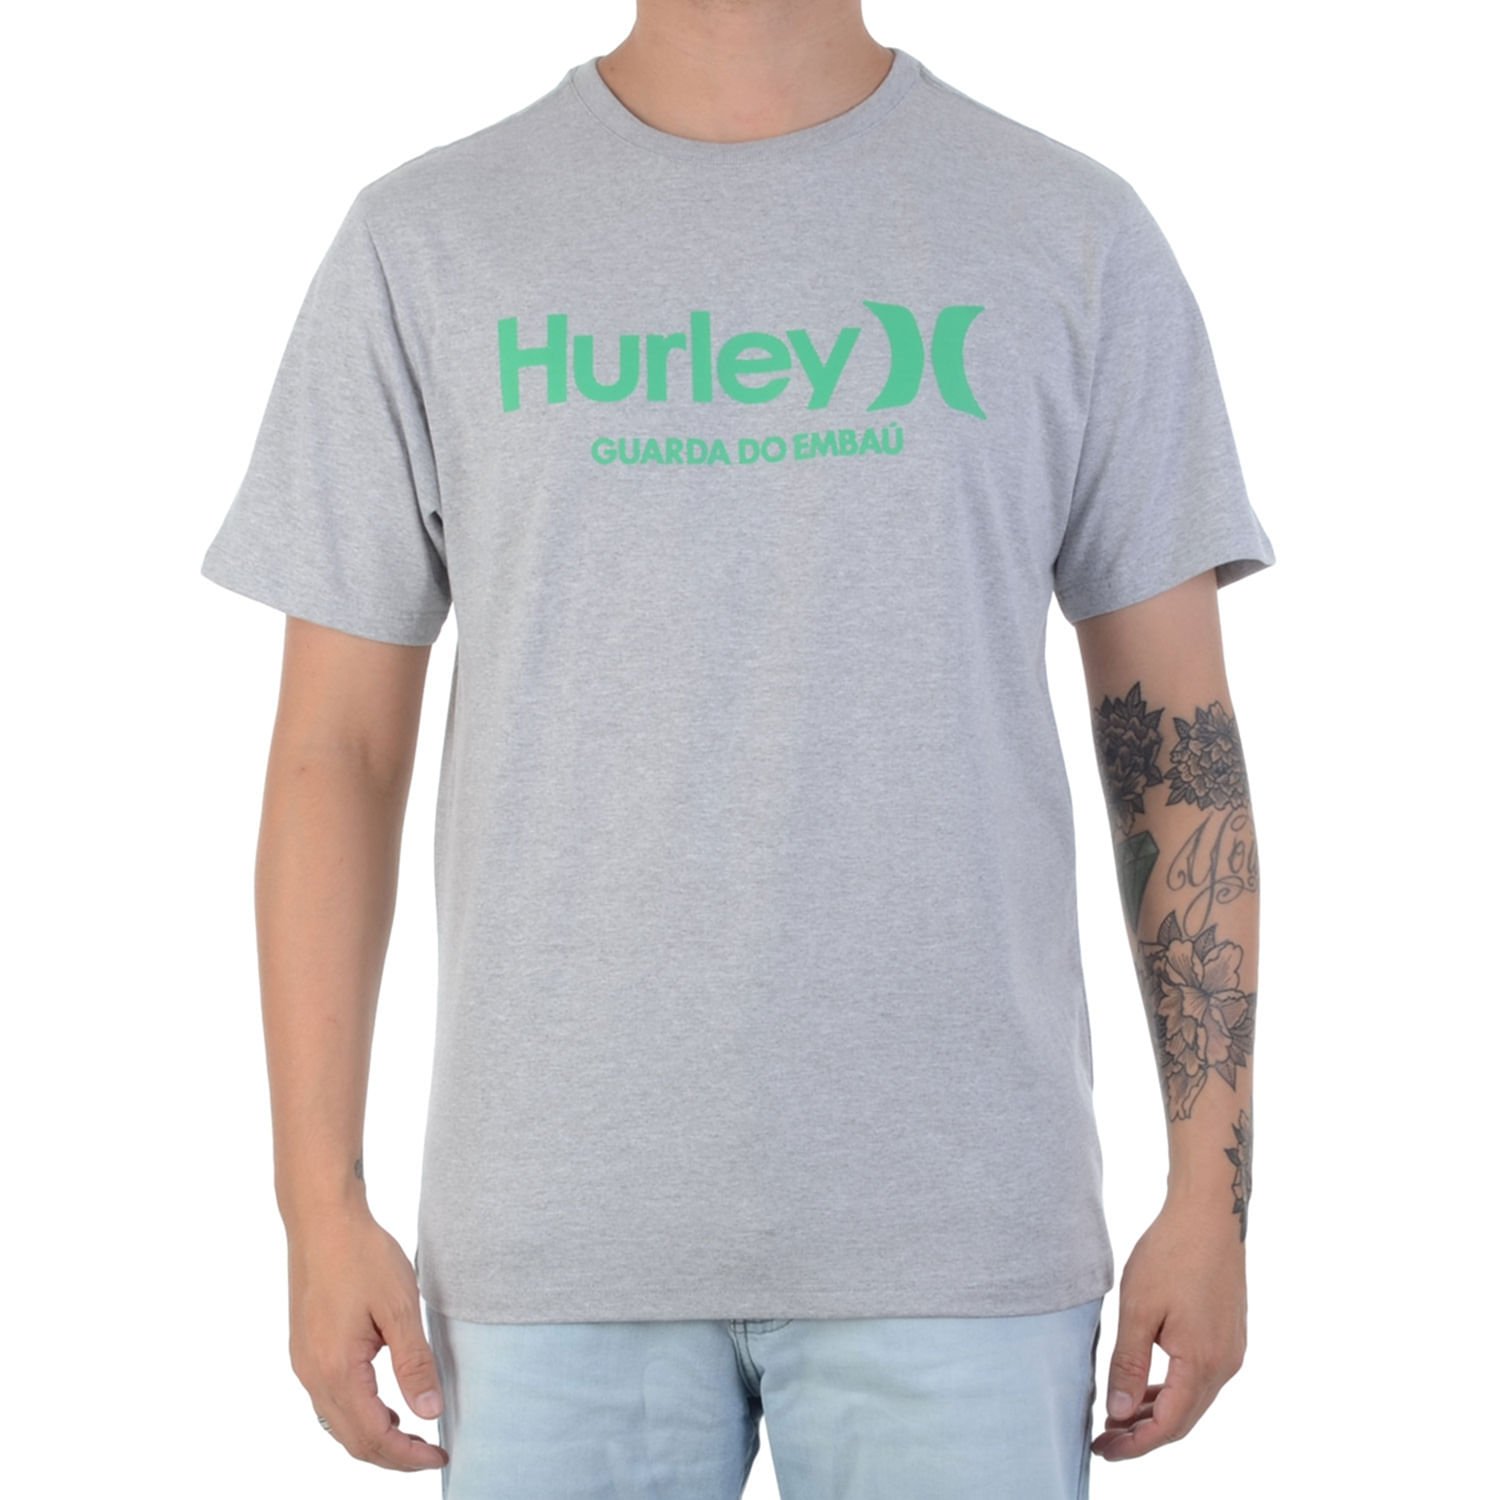 Camiseta Masculina Hurley Guarda do Embaú